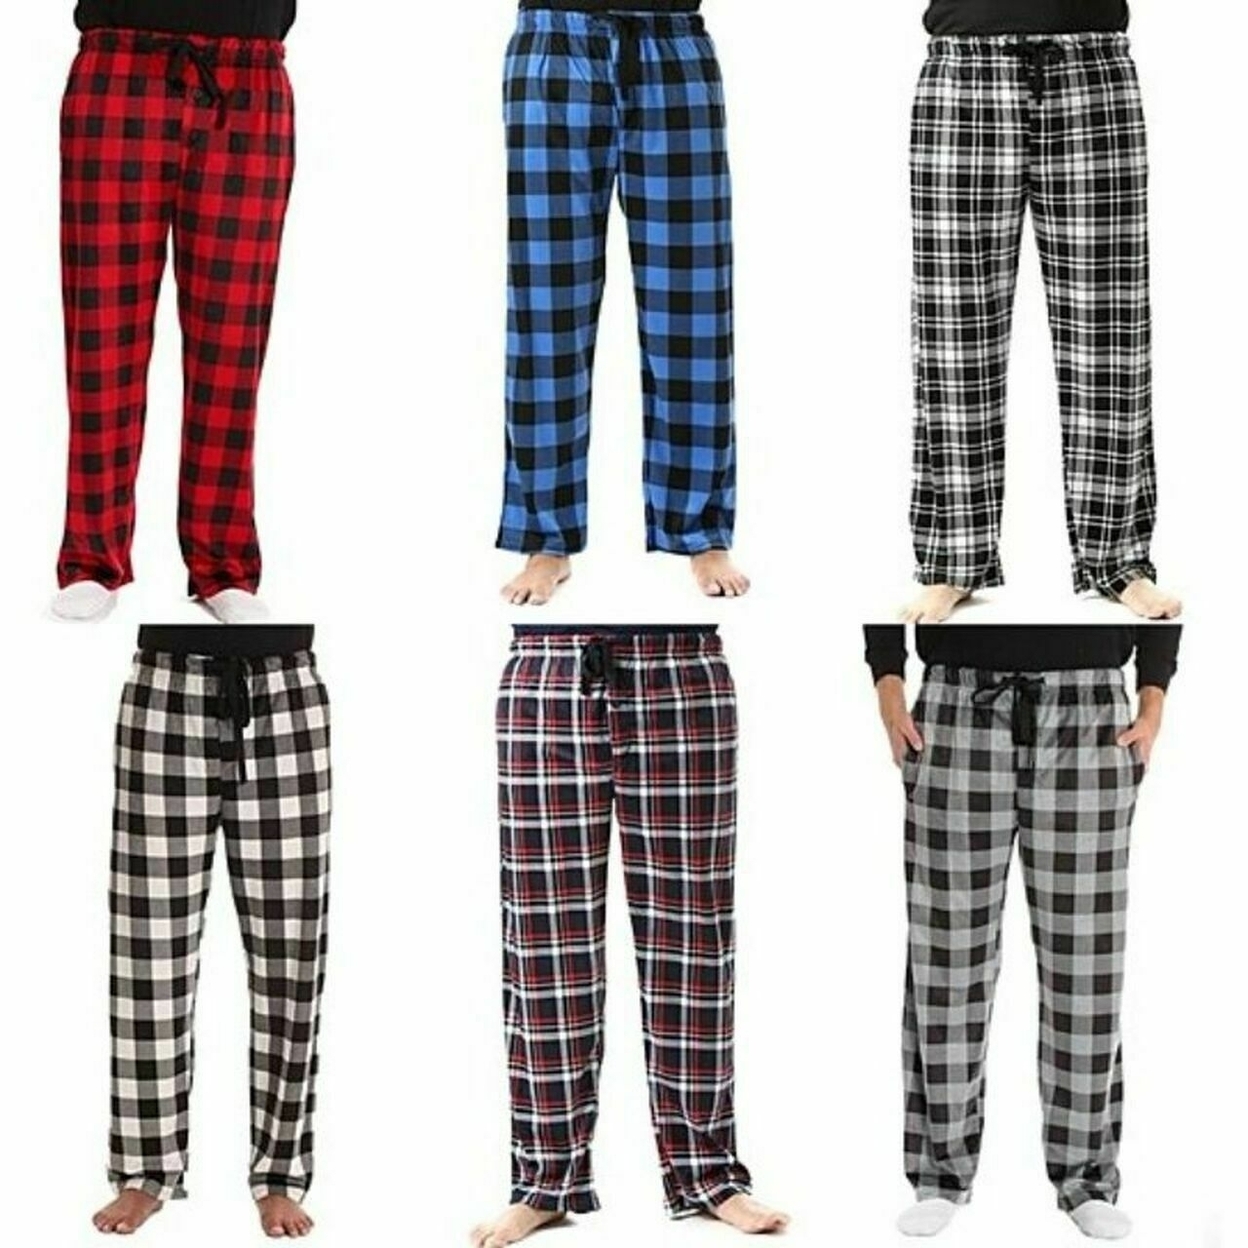 2-Pack: Men's Ultra Soft Cozy Flannel Fleece Plaid Pajama Sleep Bottom Lounge Pants - Red & Grey, Large